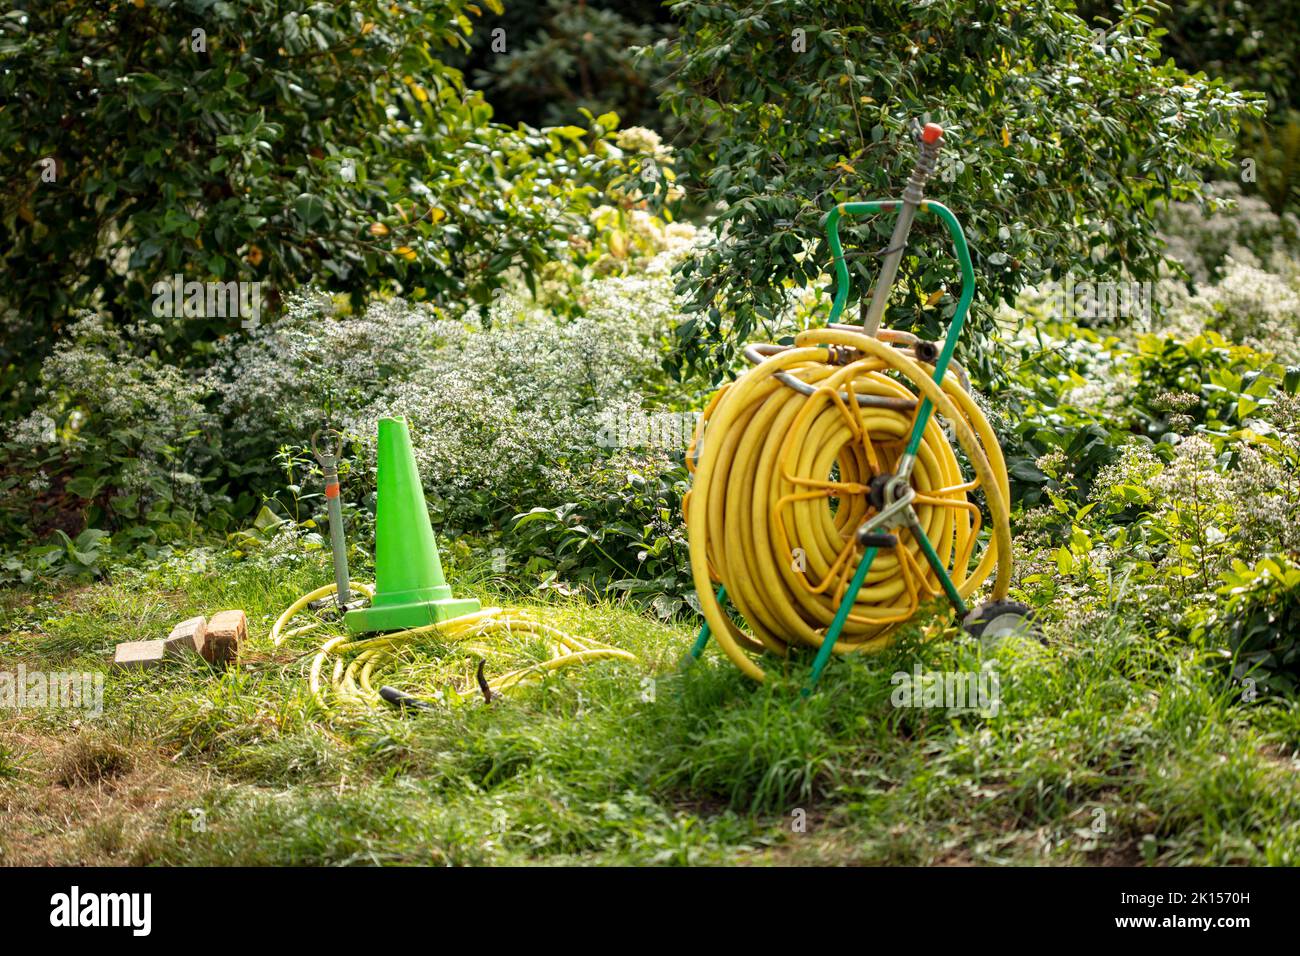 https://c8.alamy.com/comp/2K1570H/yellow-hose-and-hose-reel-in-natural-garden-setting-2K1570H.jpg